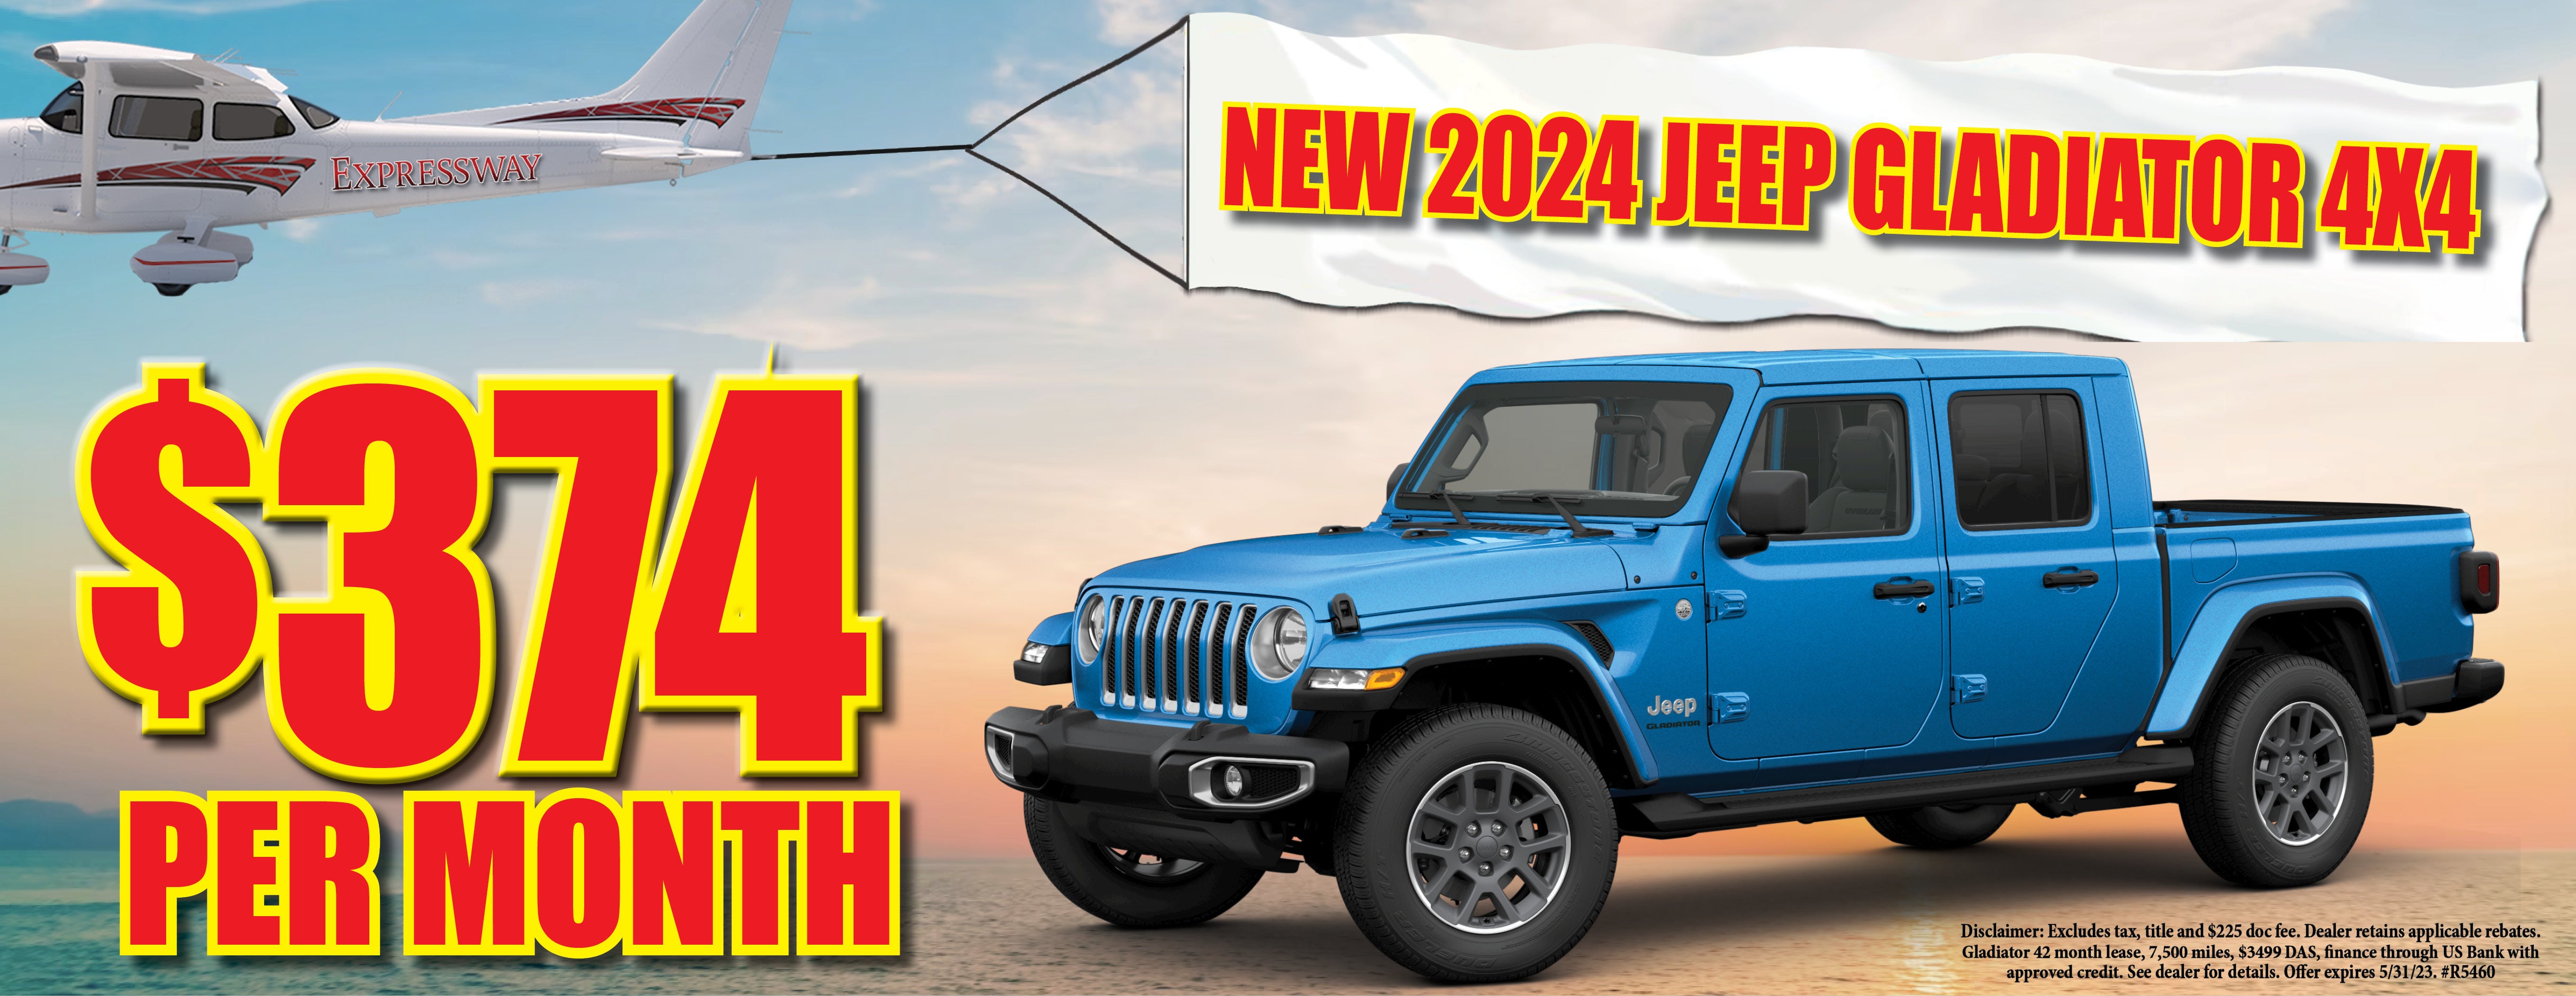 2024 Jeep Gladiator 4x4